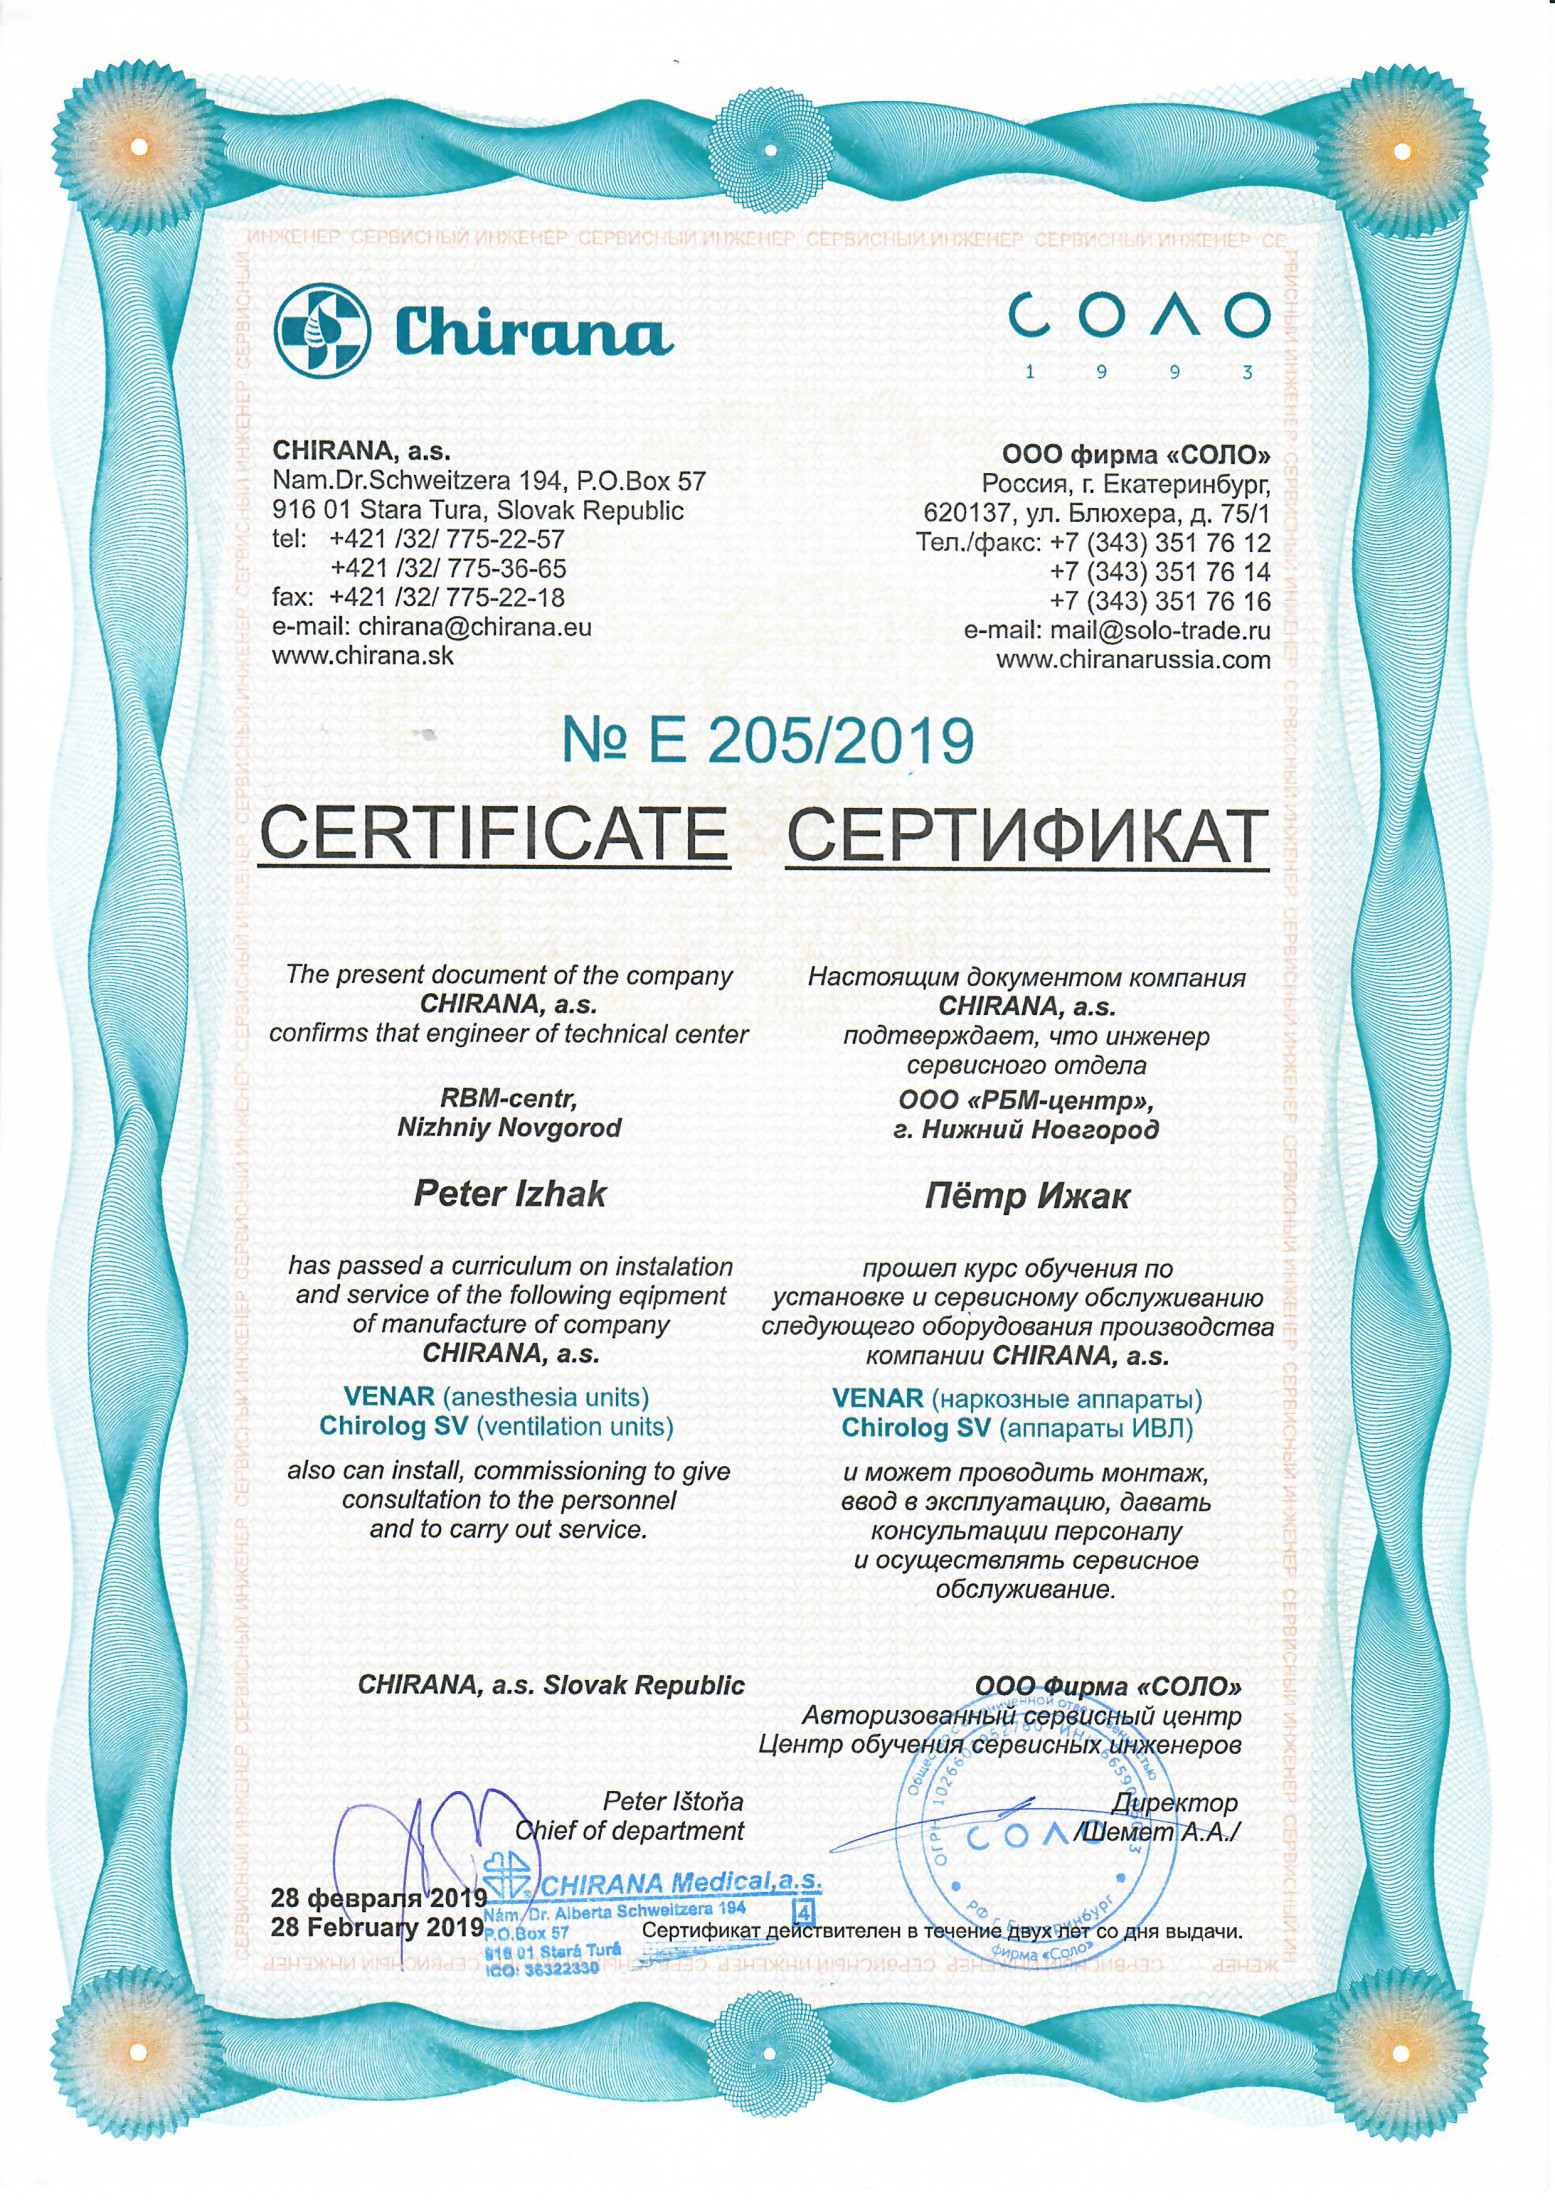 Сертификат от Chirana 2019